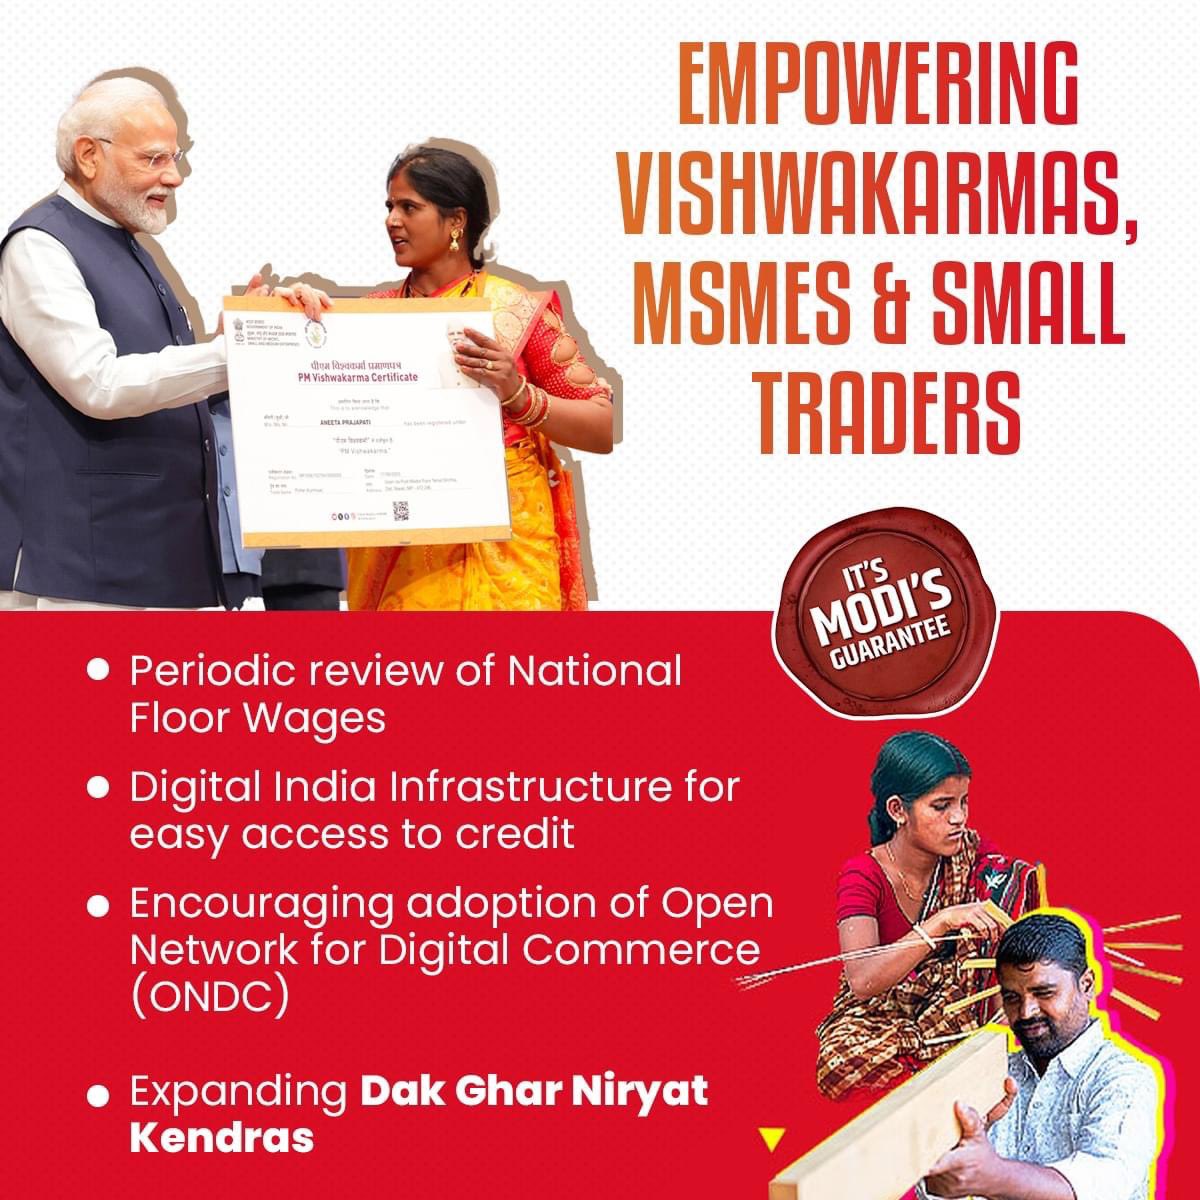 Empowering Vishwakarmas, MSMEs and small traders is #ModiKiGuarantee.

#PhirEkBaarModiSarkar